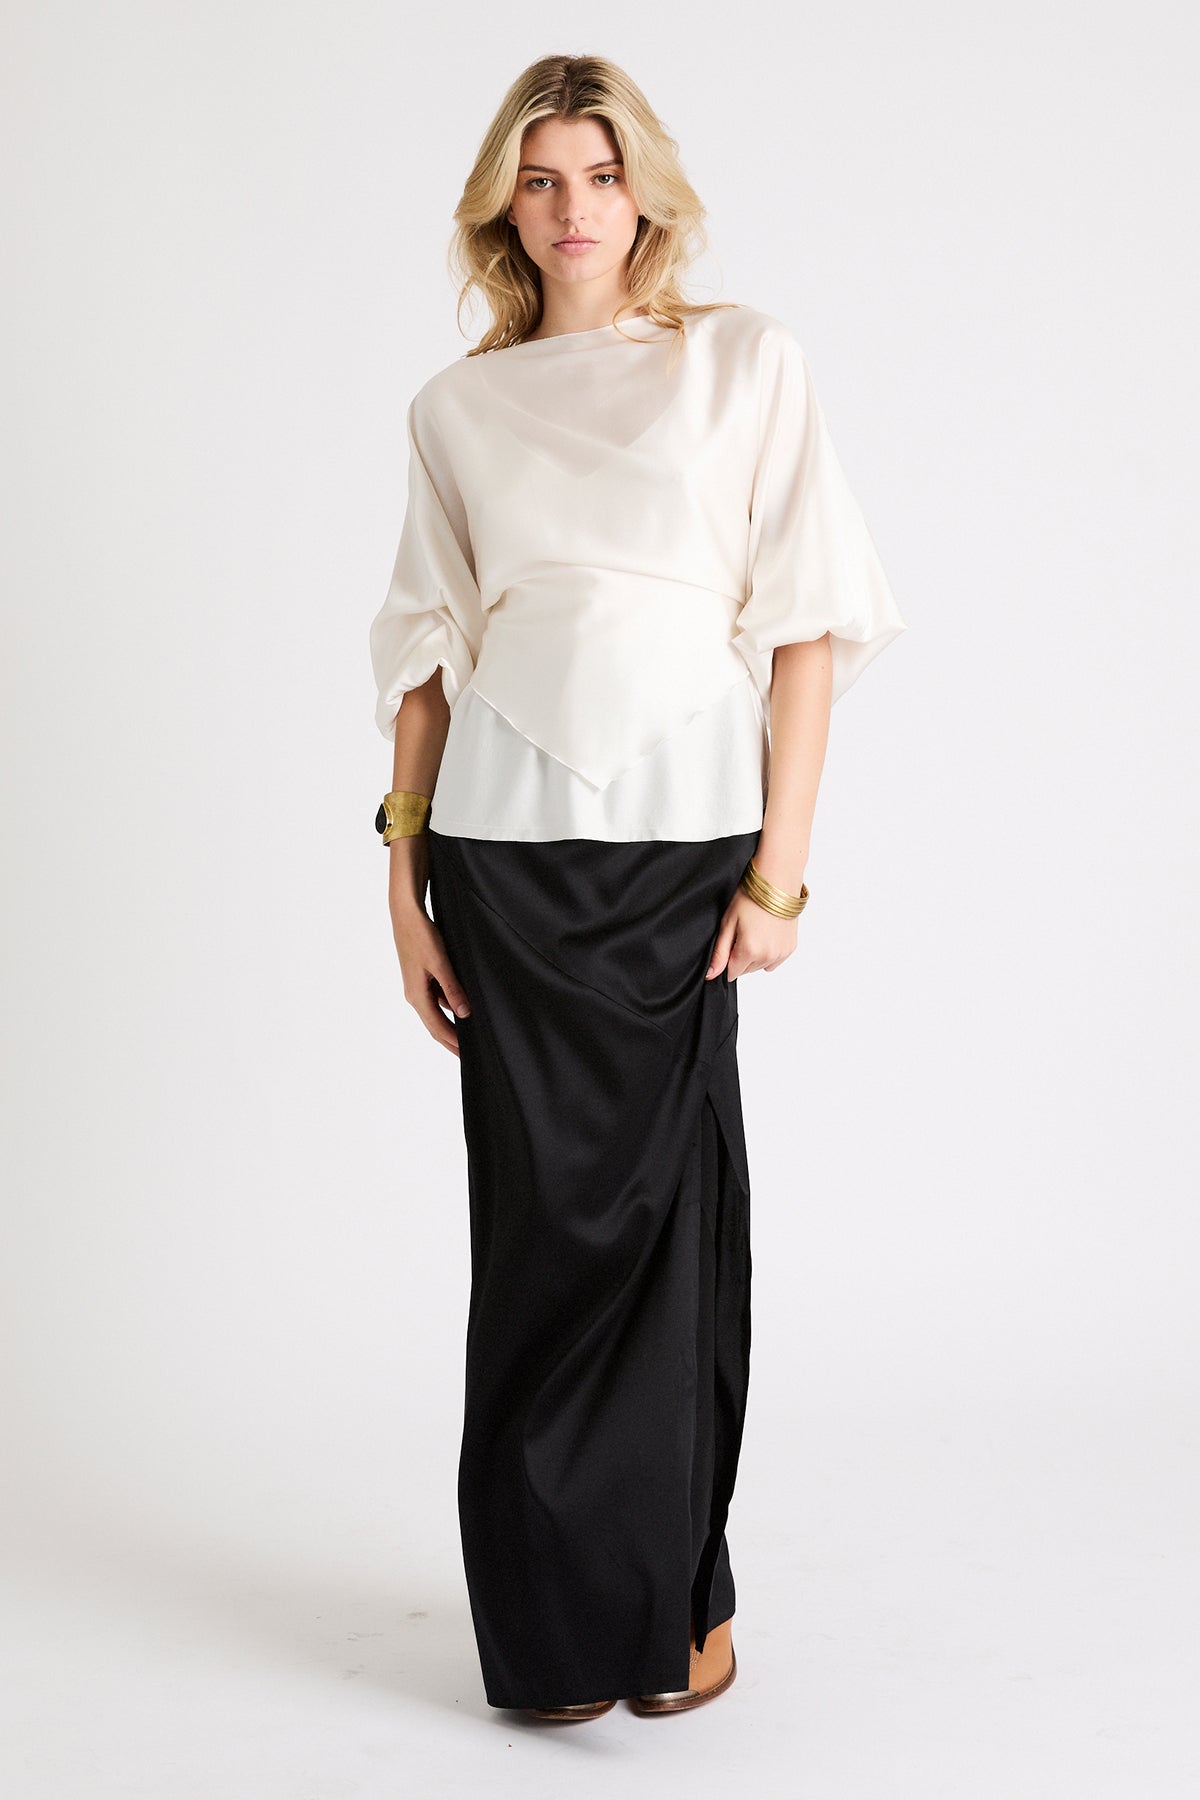 + Beryll Naomi Silk Skirt | Black - + Beryll Silk Skirt Naomi | Black - +Beryll Worn By Good People